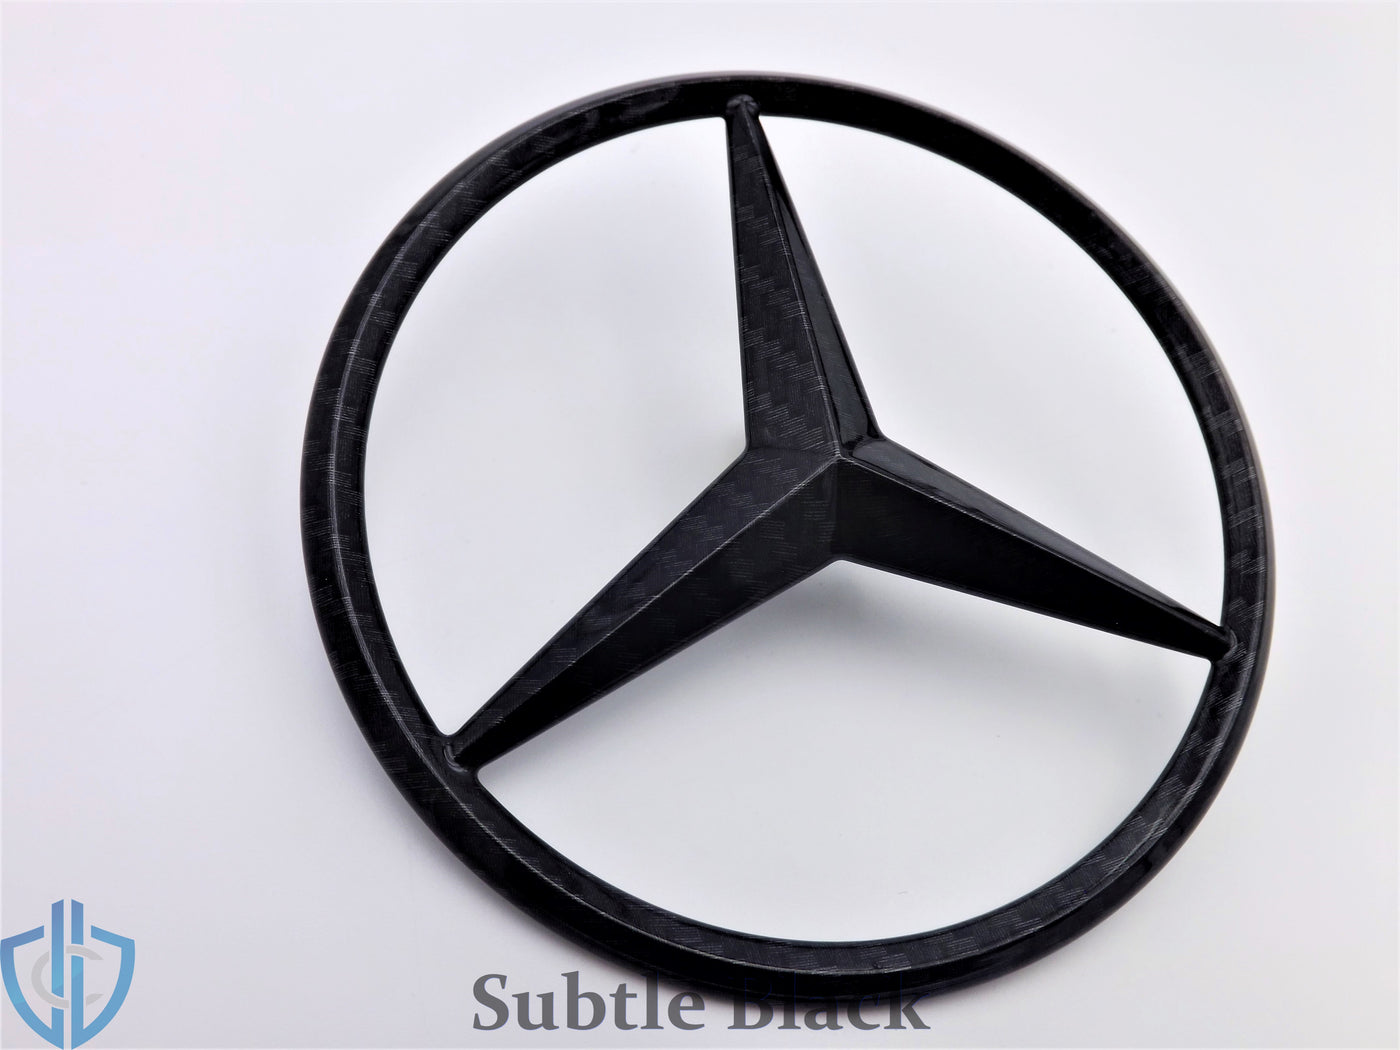 Mercedes Benz Trunk Lid Star Emblem Badge Original 8CM Diameter For C  Class, CLA, GLA : : Car & Motorbike